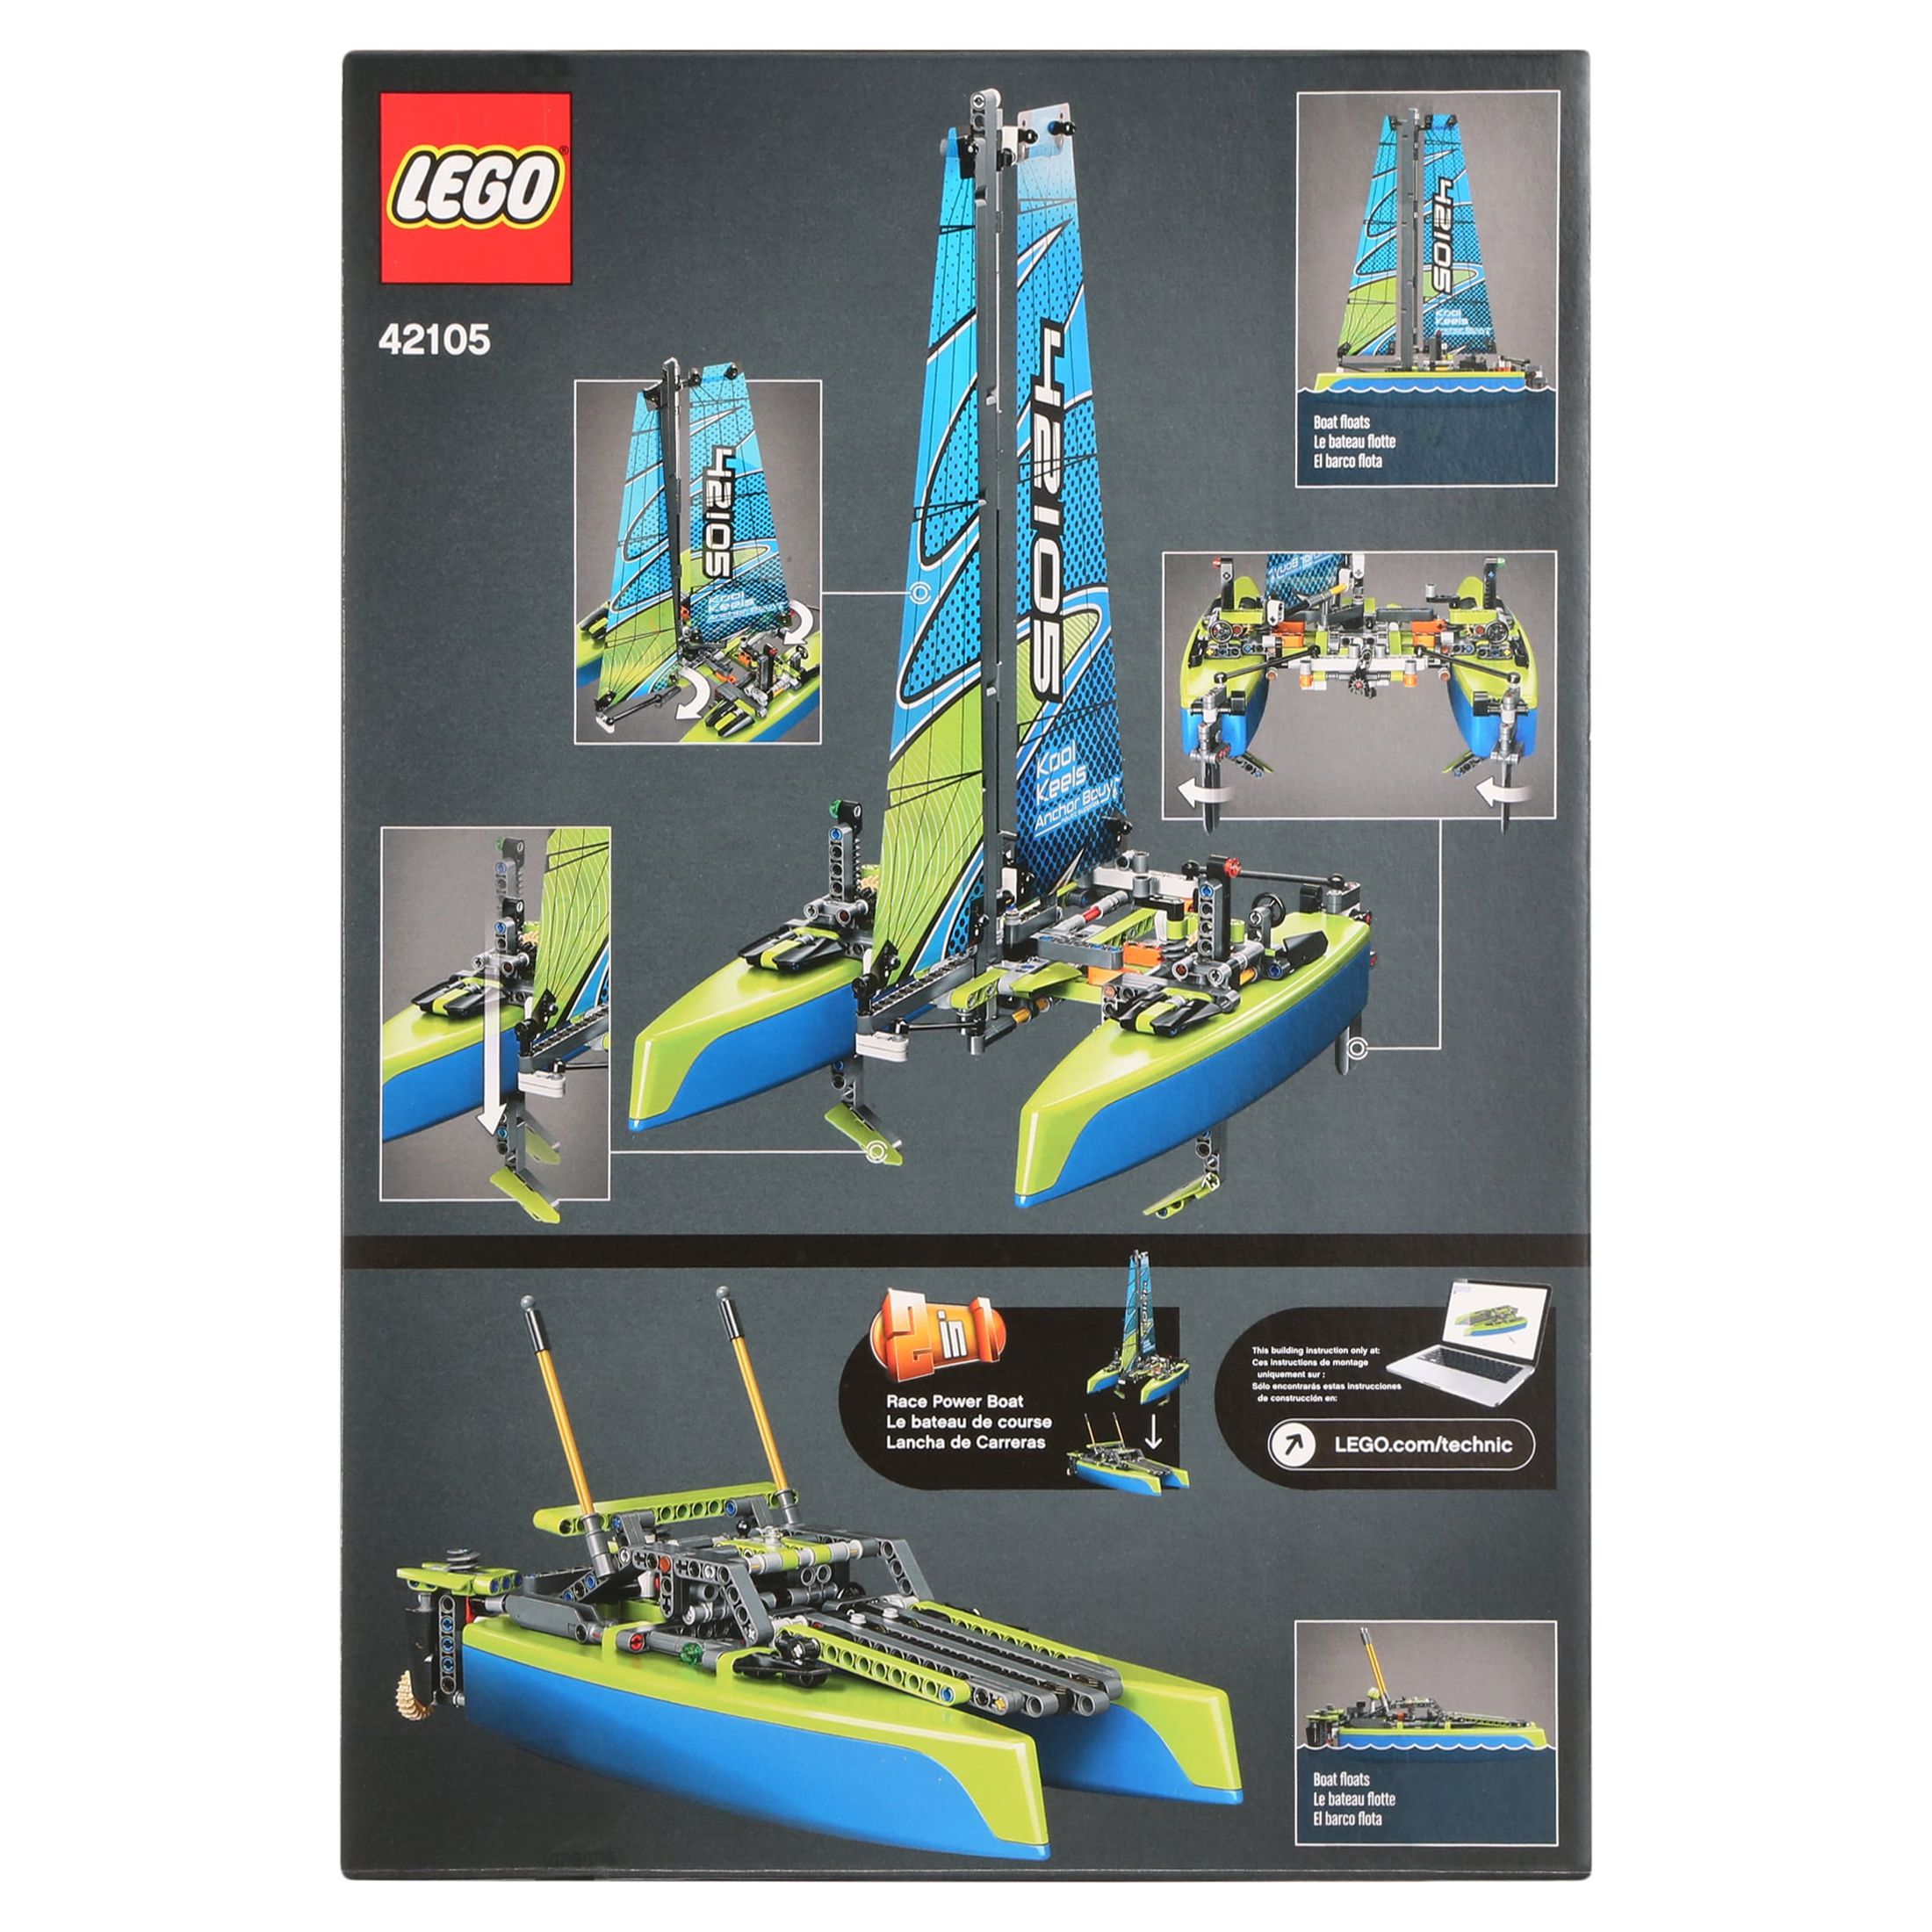 LEGO Technic Catamaran 42105 Model Sailboat Building Kit (404 pieces) - image 4 of 10